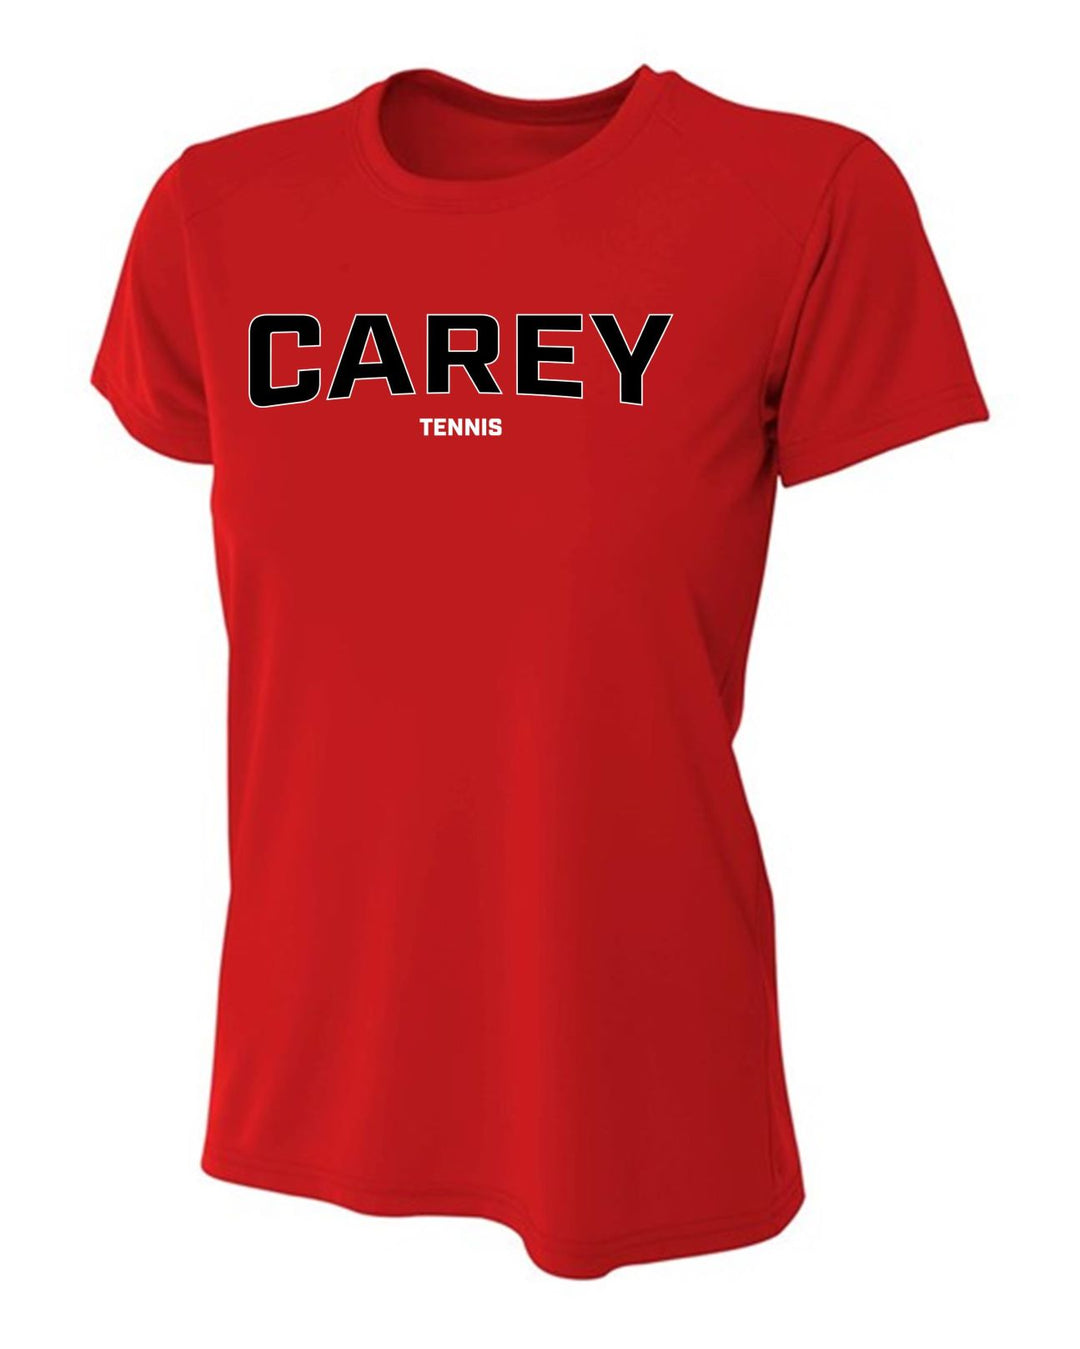 WCU Tennis Women's Short-Sleeve Performance Shirt WCU Tennis Red CAREY - Third Coast Soccer